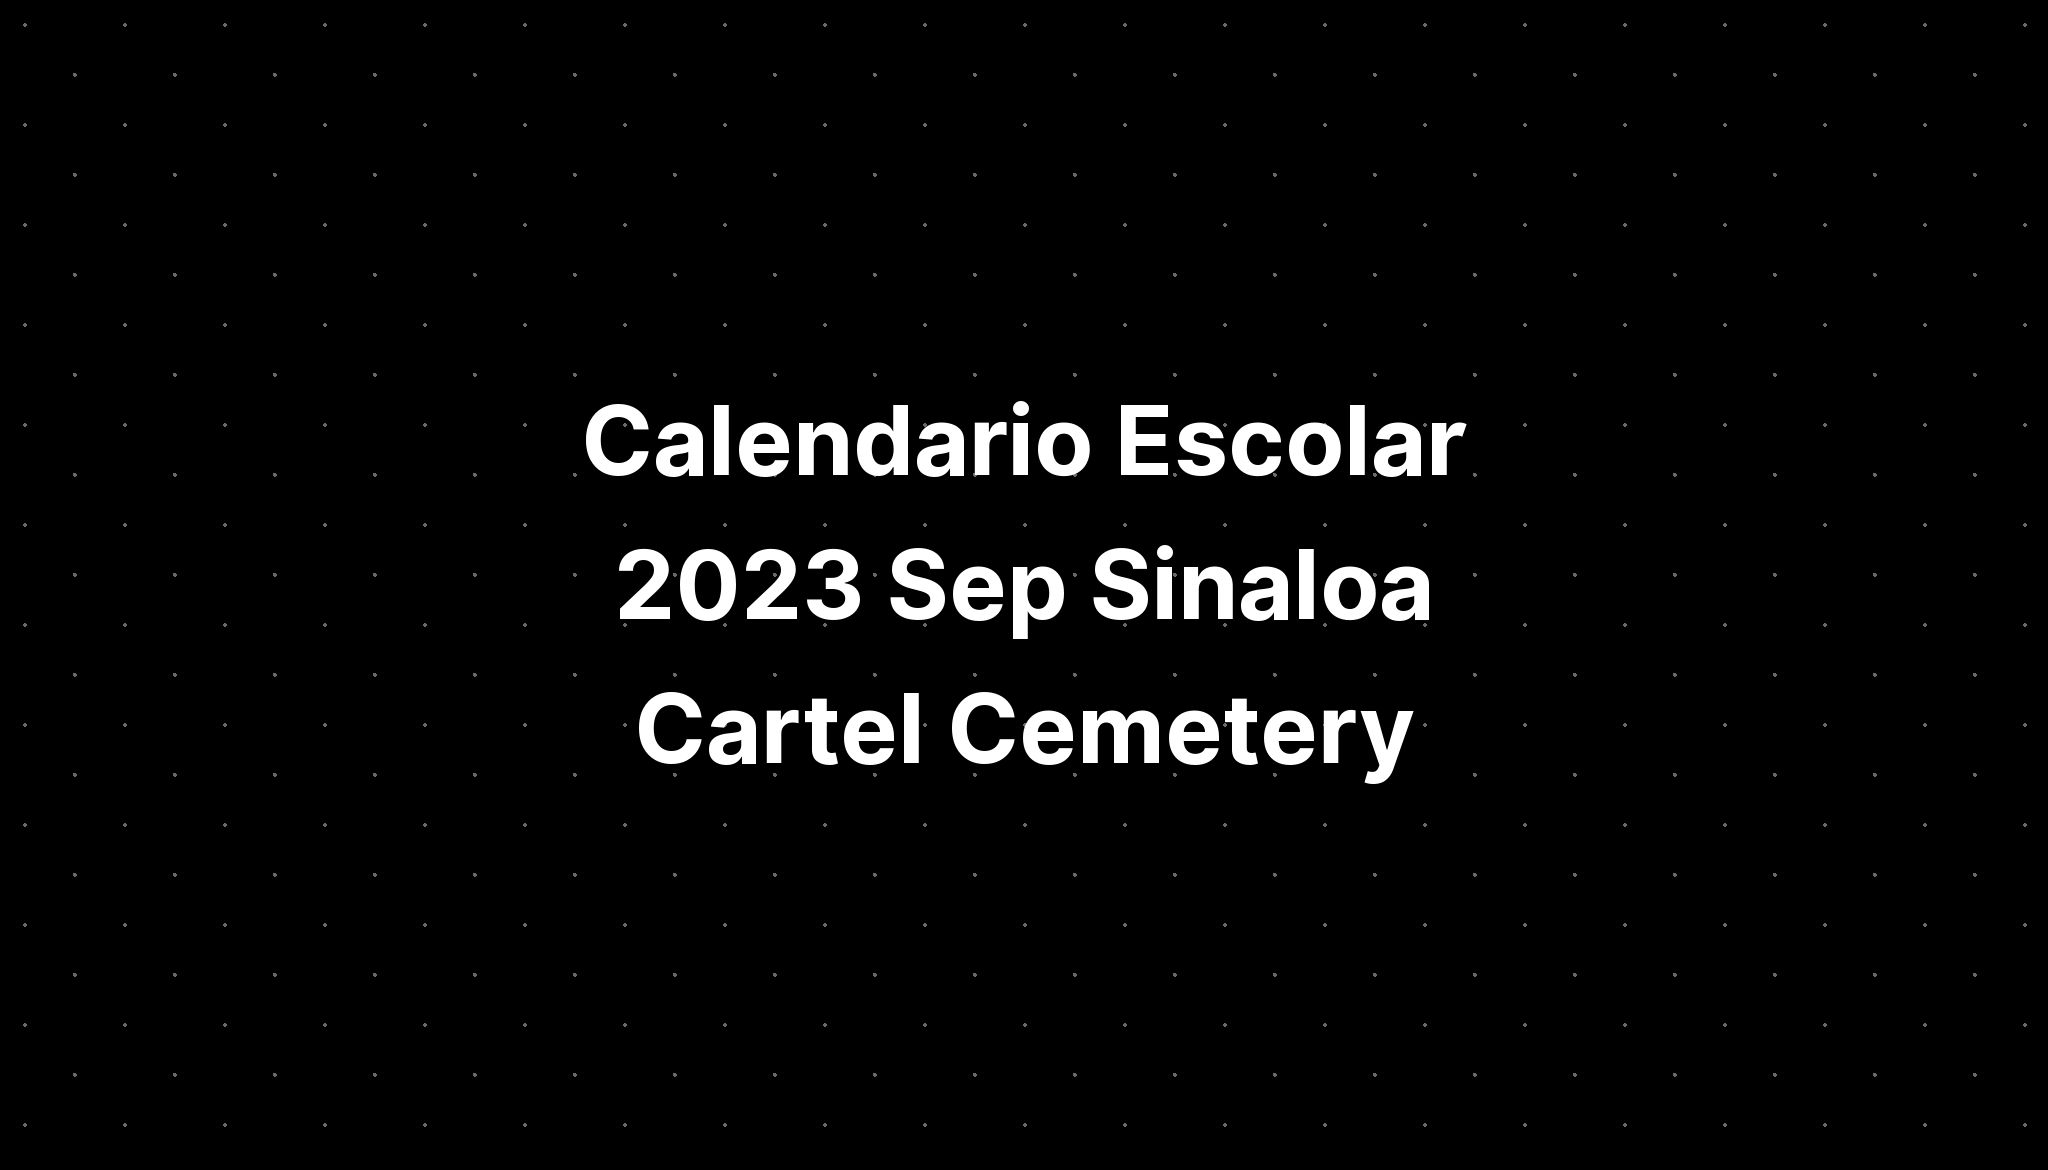 Sinaloa Cartel Cemetery